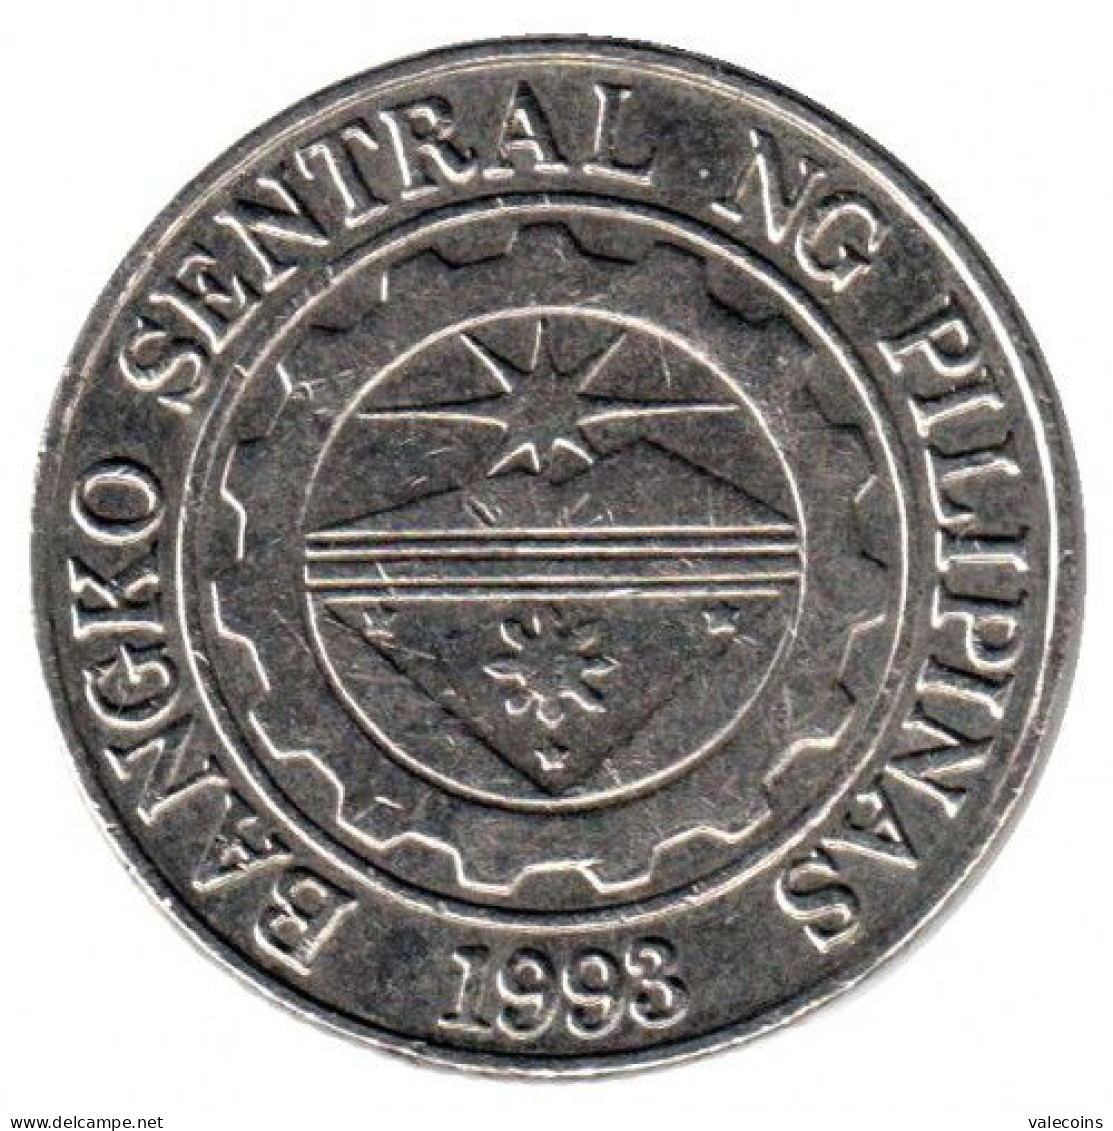 FILIPPINE PILIPINAS PHILIPPINES - 1997 - 1 Piso - KM 269 - Coin UNC - Filippine